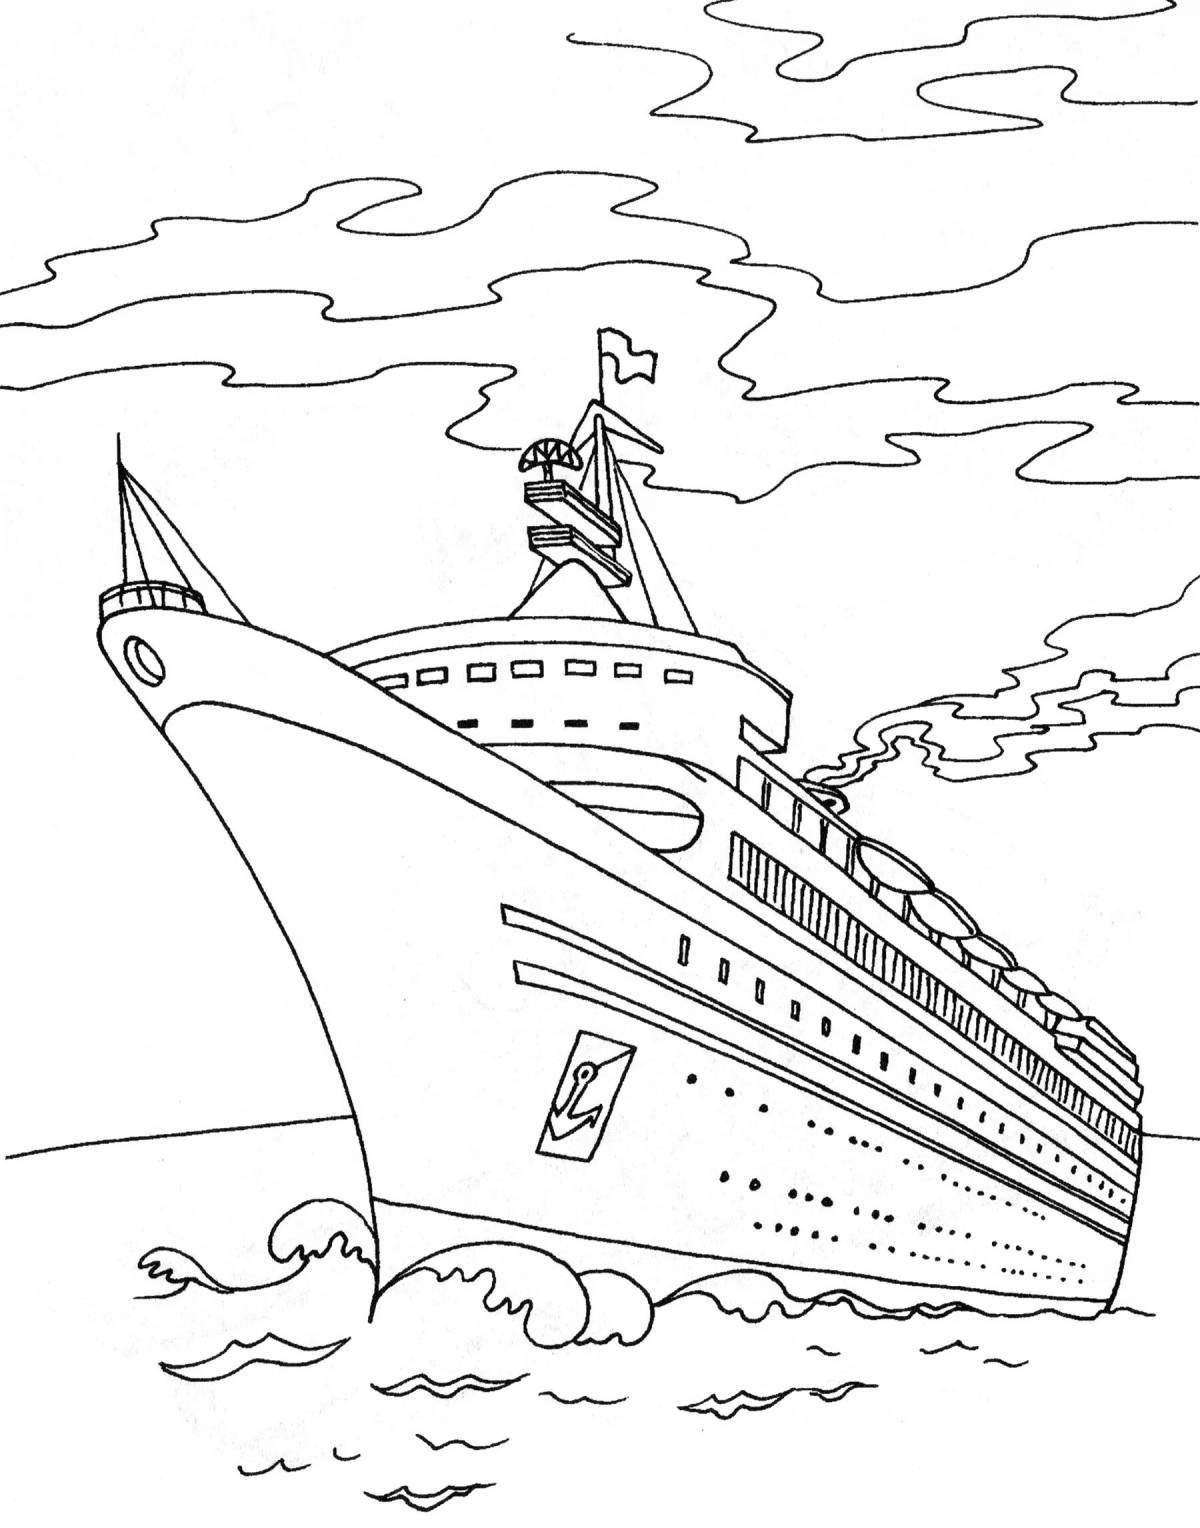 Majestic passenger ship coloring page